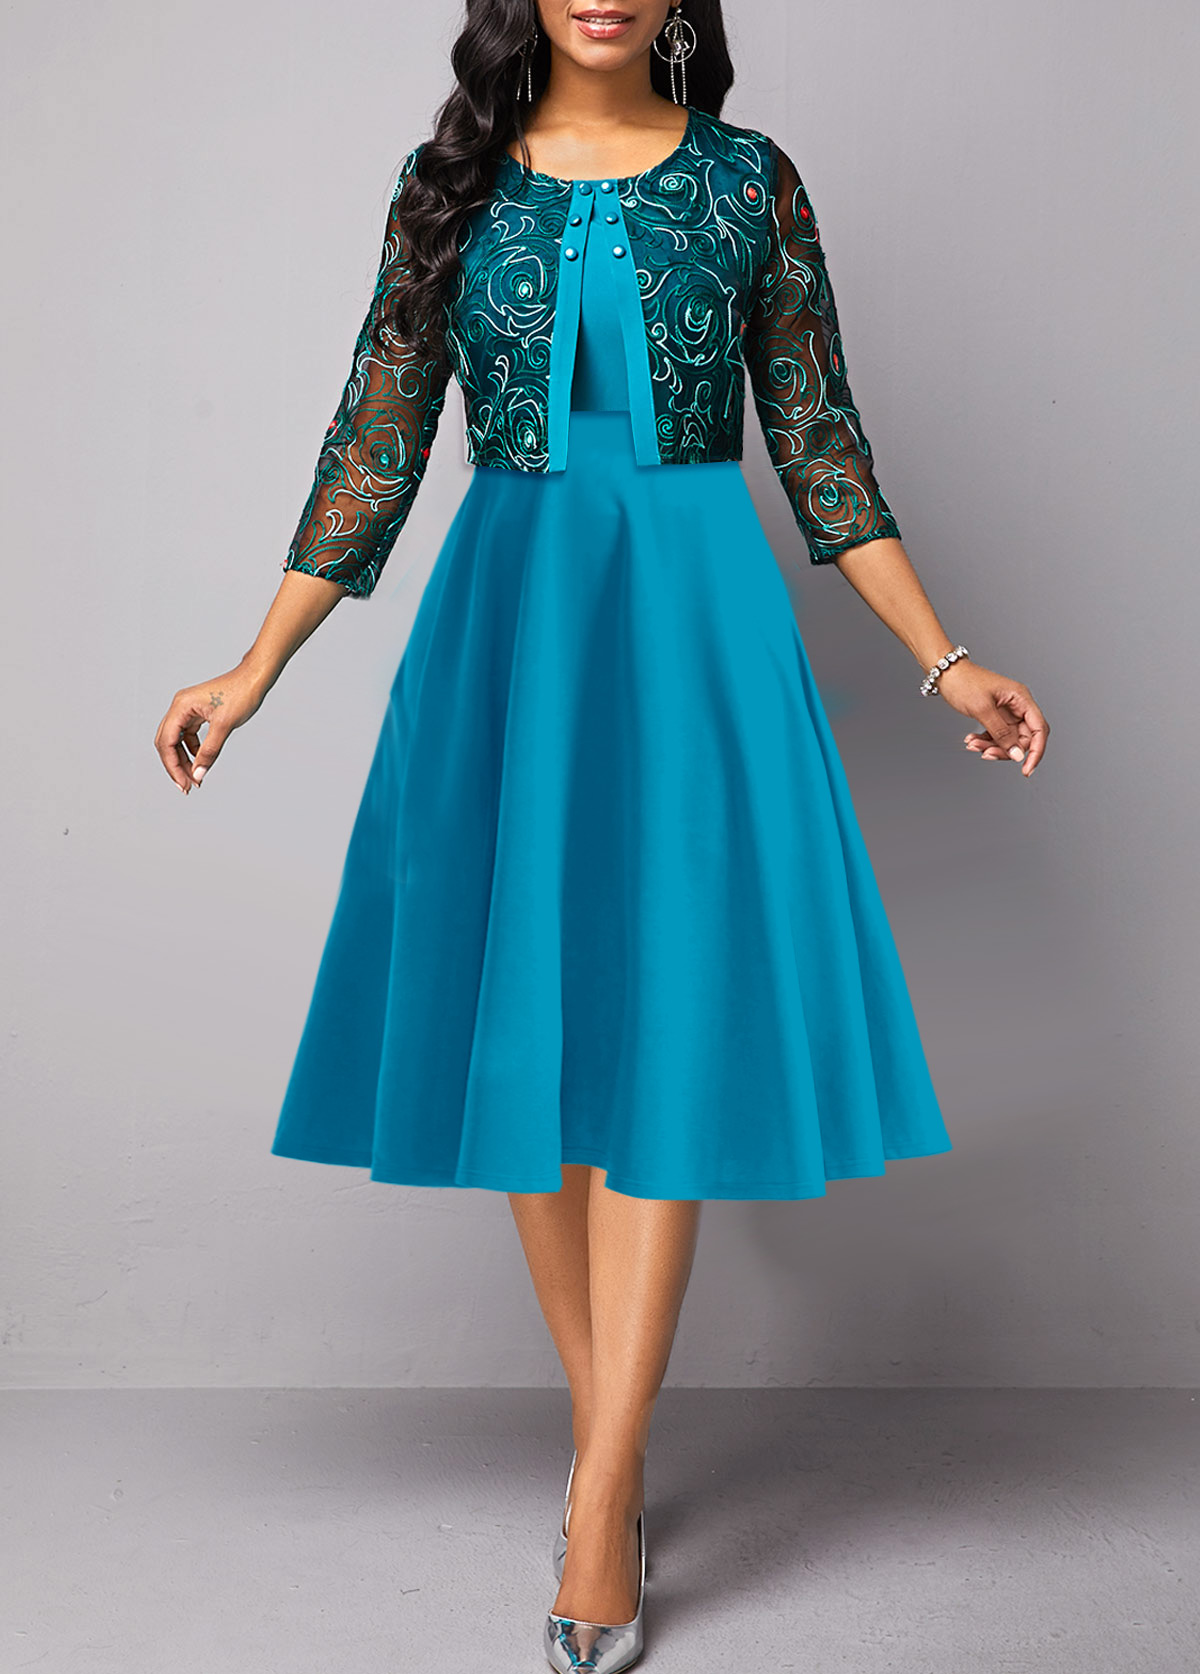 Peacock Blue Lace Three Quarter Length Sleeve Dress